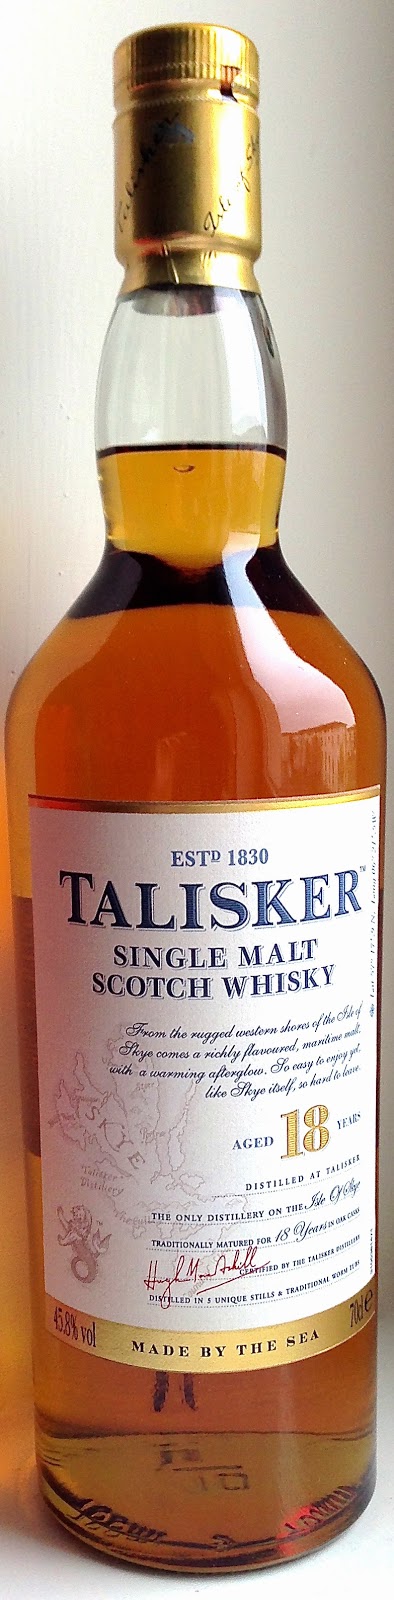 Talisker 18 year old single malt whisky